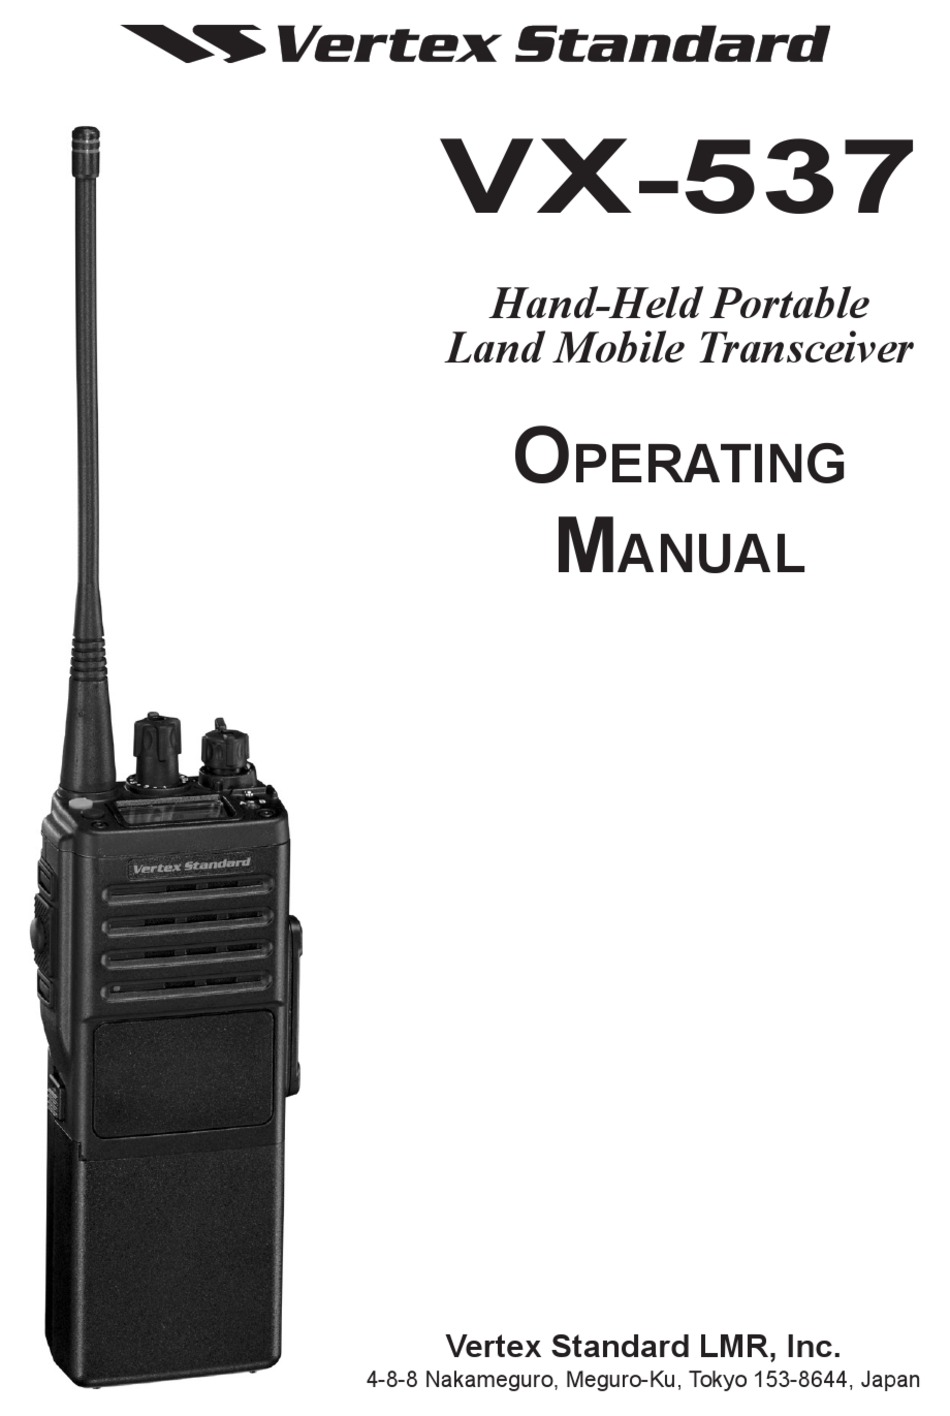 VERTEX STANDARD VX-537 OPERATING MANUAL Pdf Download | ManualsLib